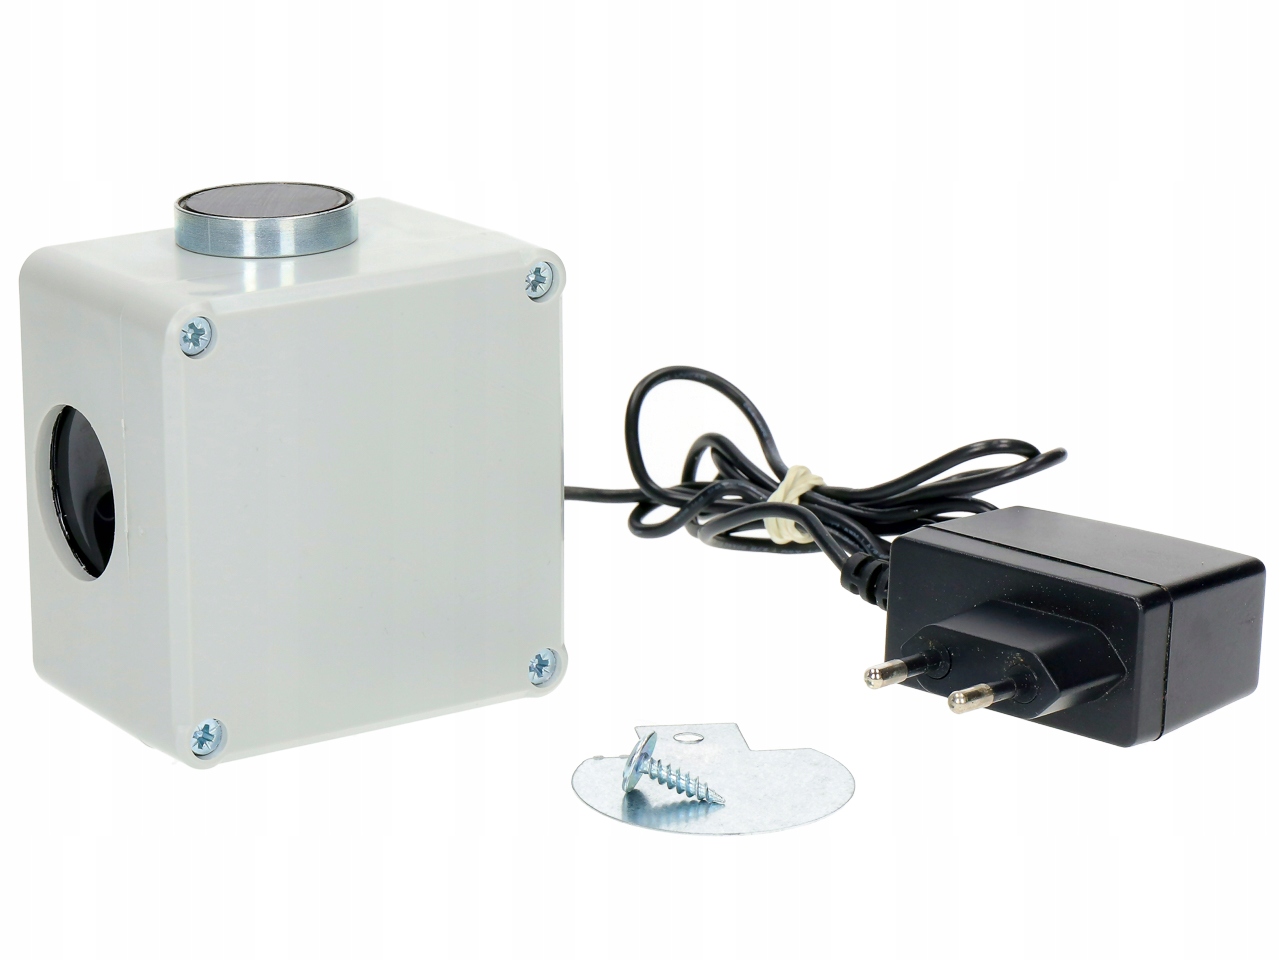 LAPKA Prostorový, vodotěsný, ultrazvukový plašič na kuny, myši a krysy